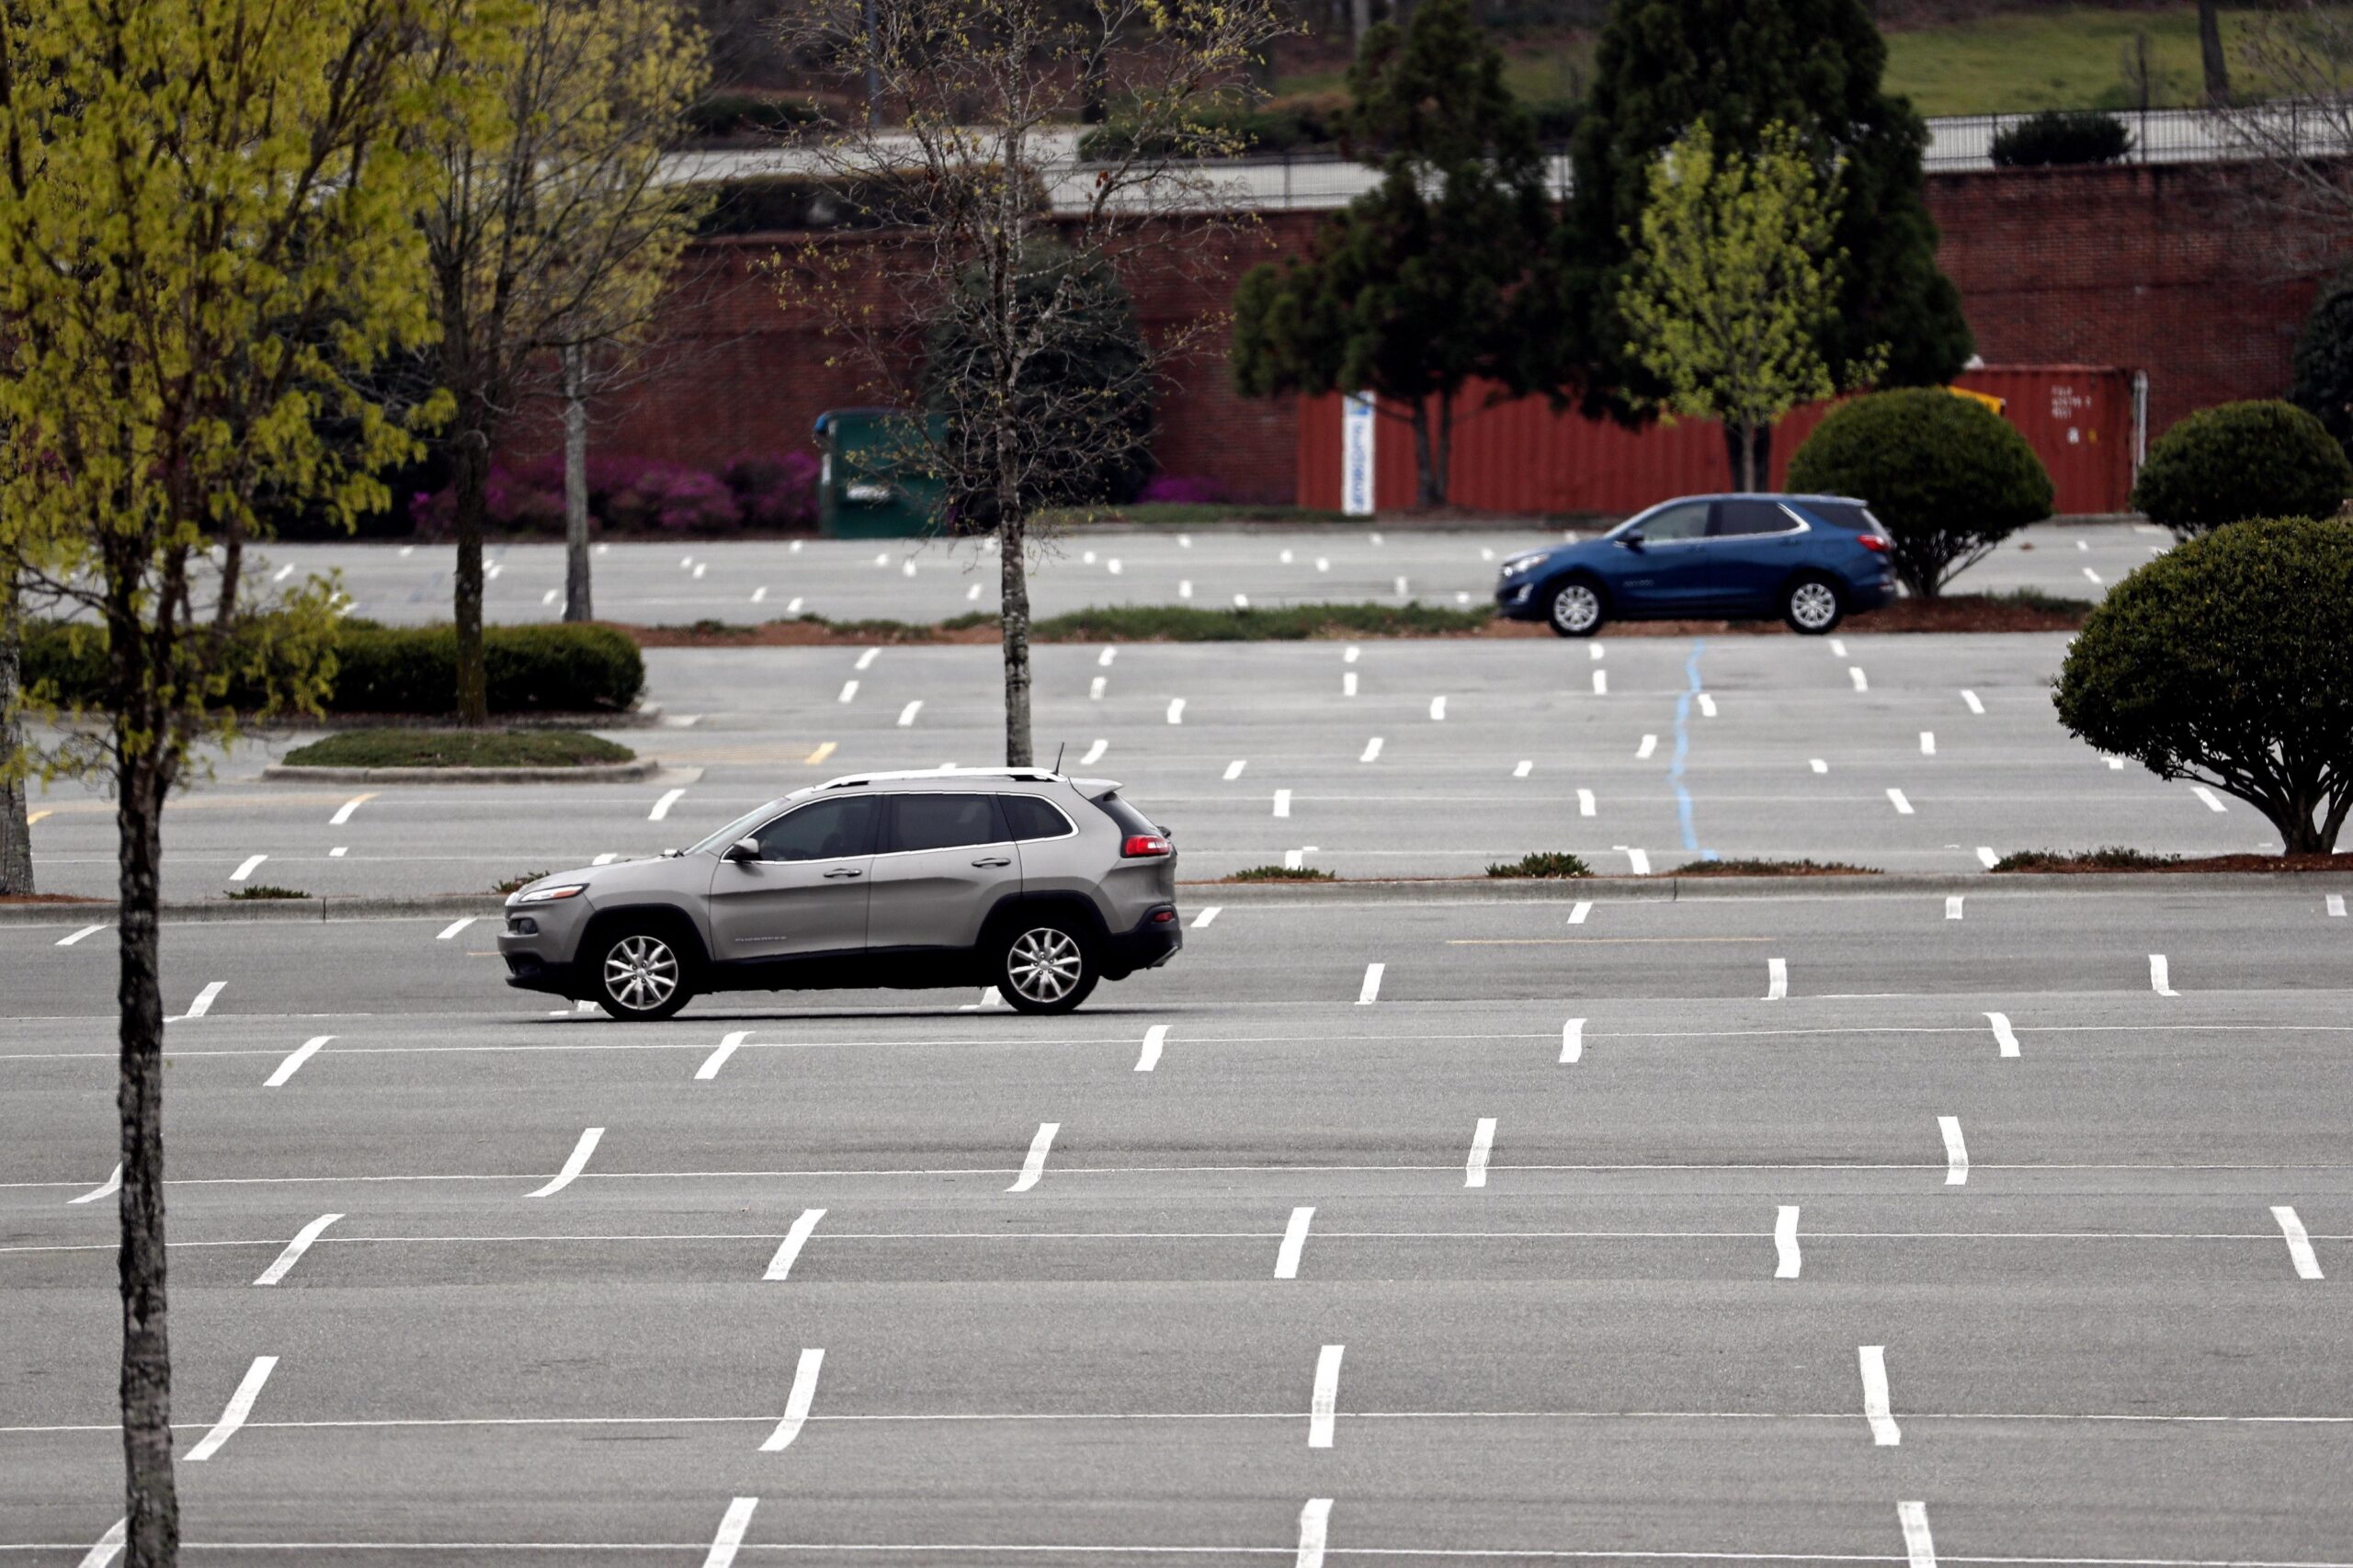 Cars drive through an empty parking lot